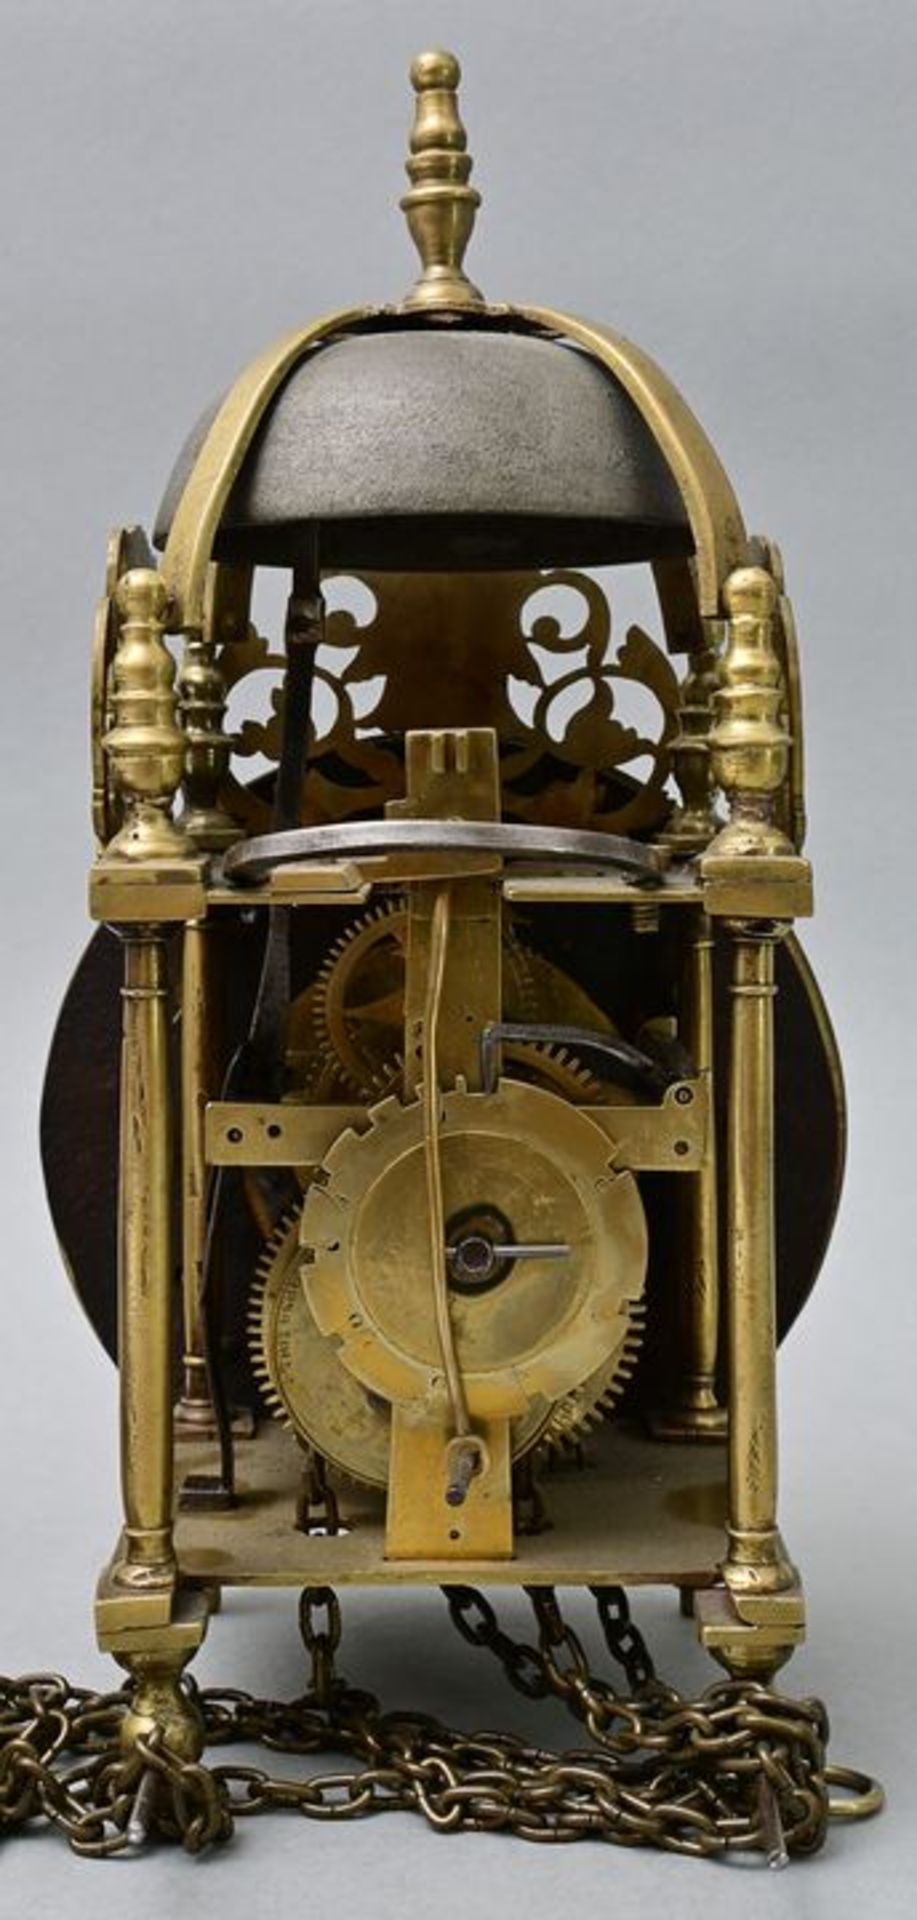 Laternenuhr/ lantern clock - Image 4 of 5